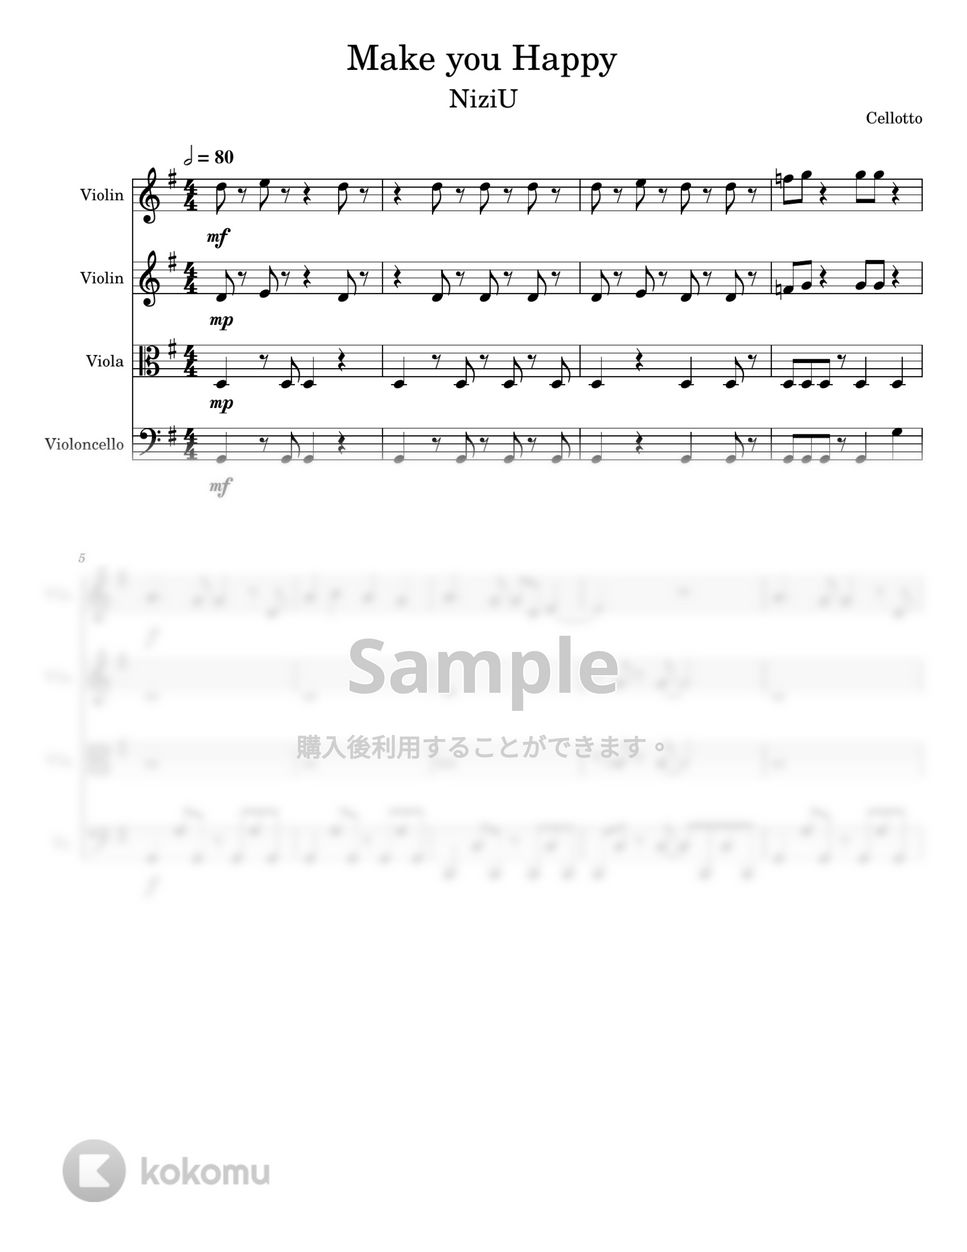 NiziU - Make you happy (弦楽四重奏) by Cellotto